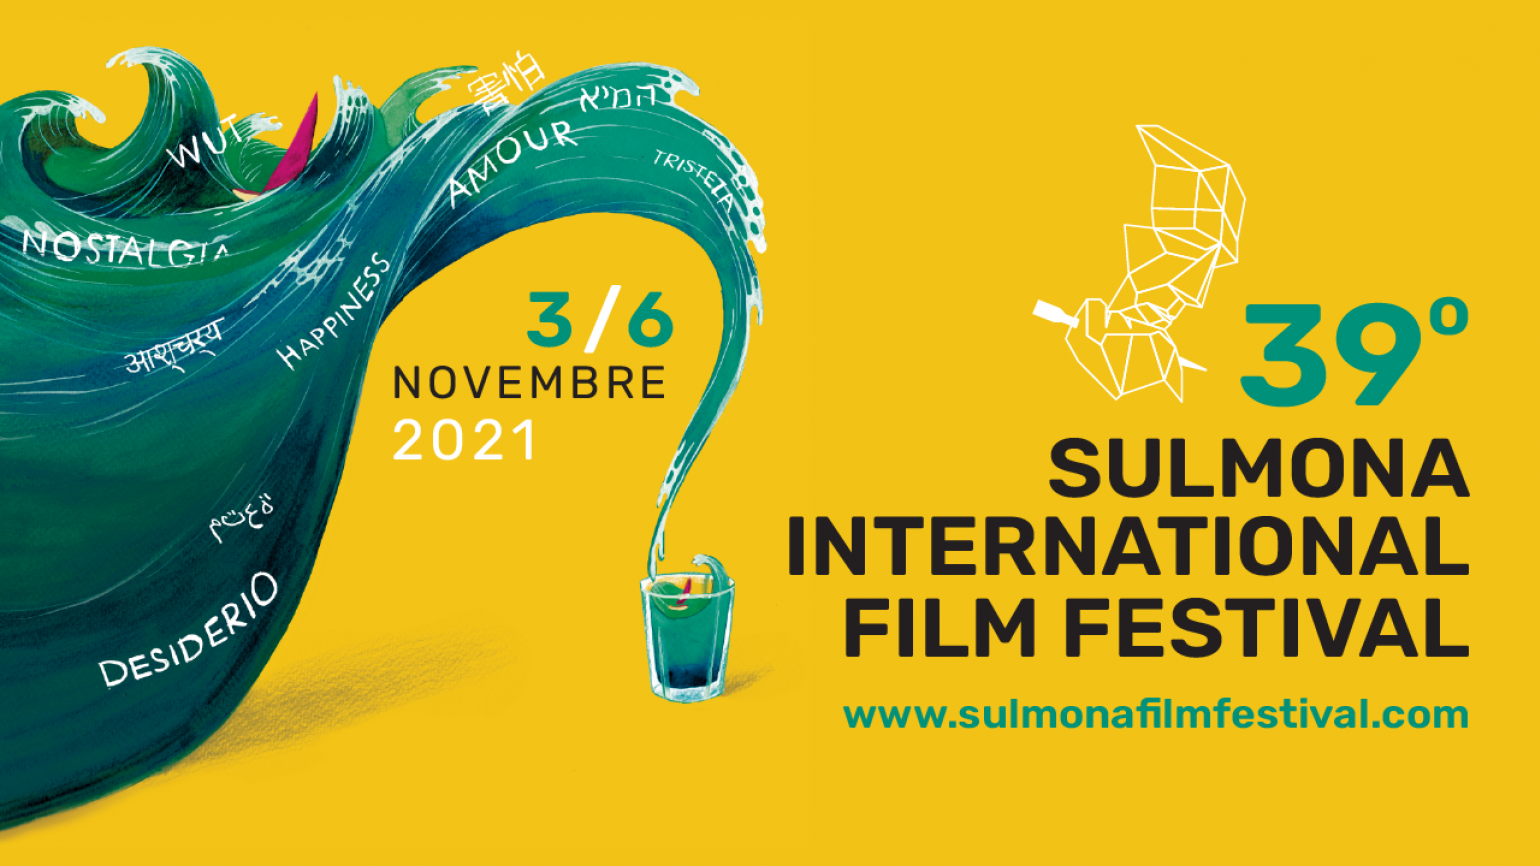 39° Sulmona International Film Festival